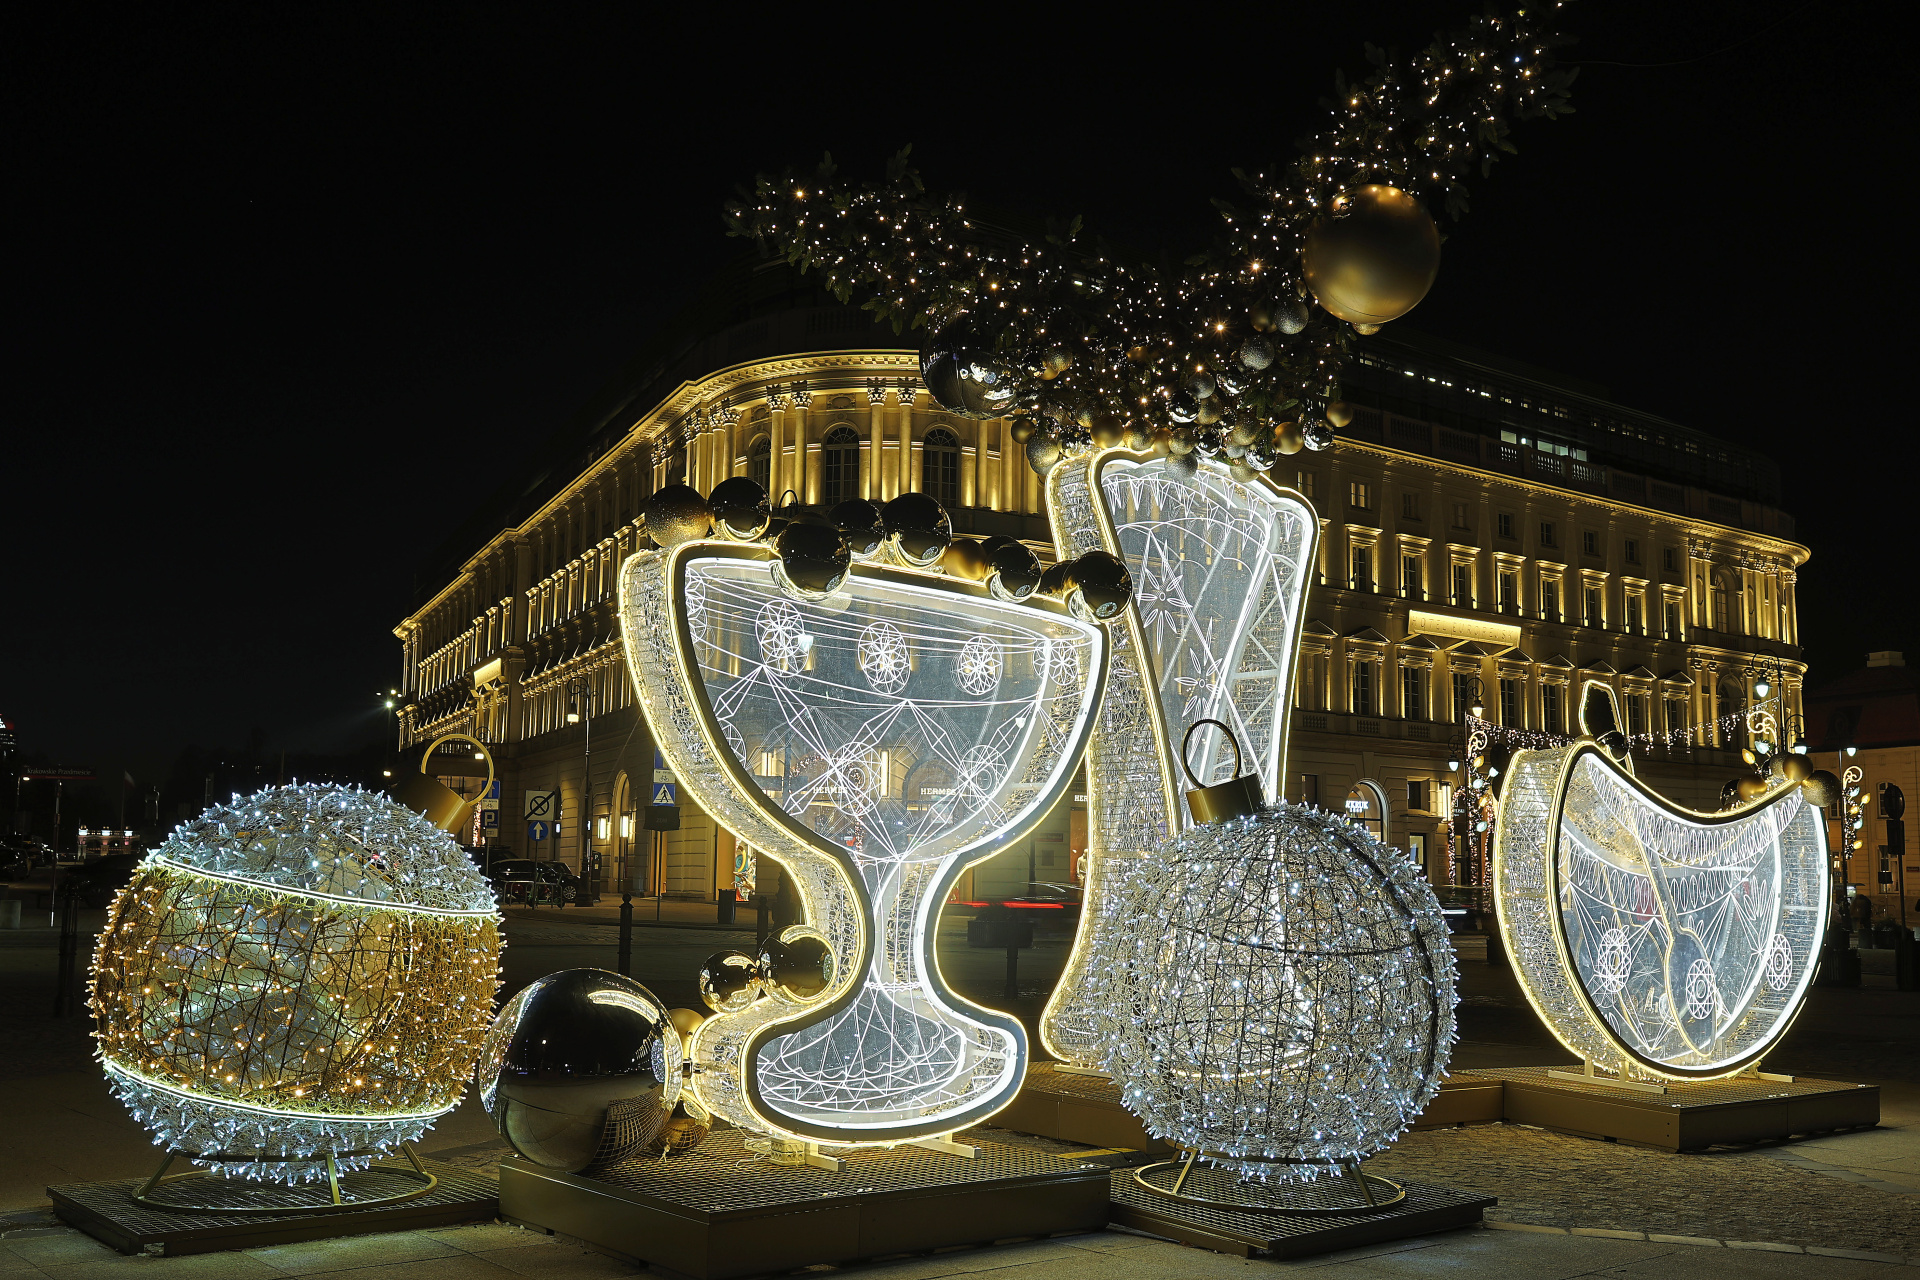 Installation near Karowa and Europejski Hotel (Warsaw » Christmas Illumination)